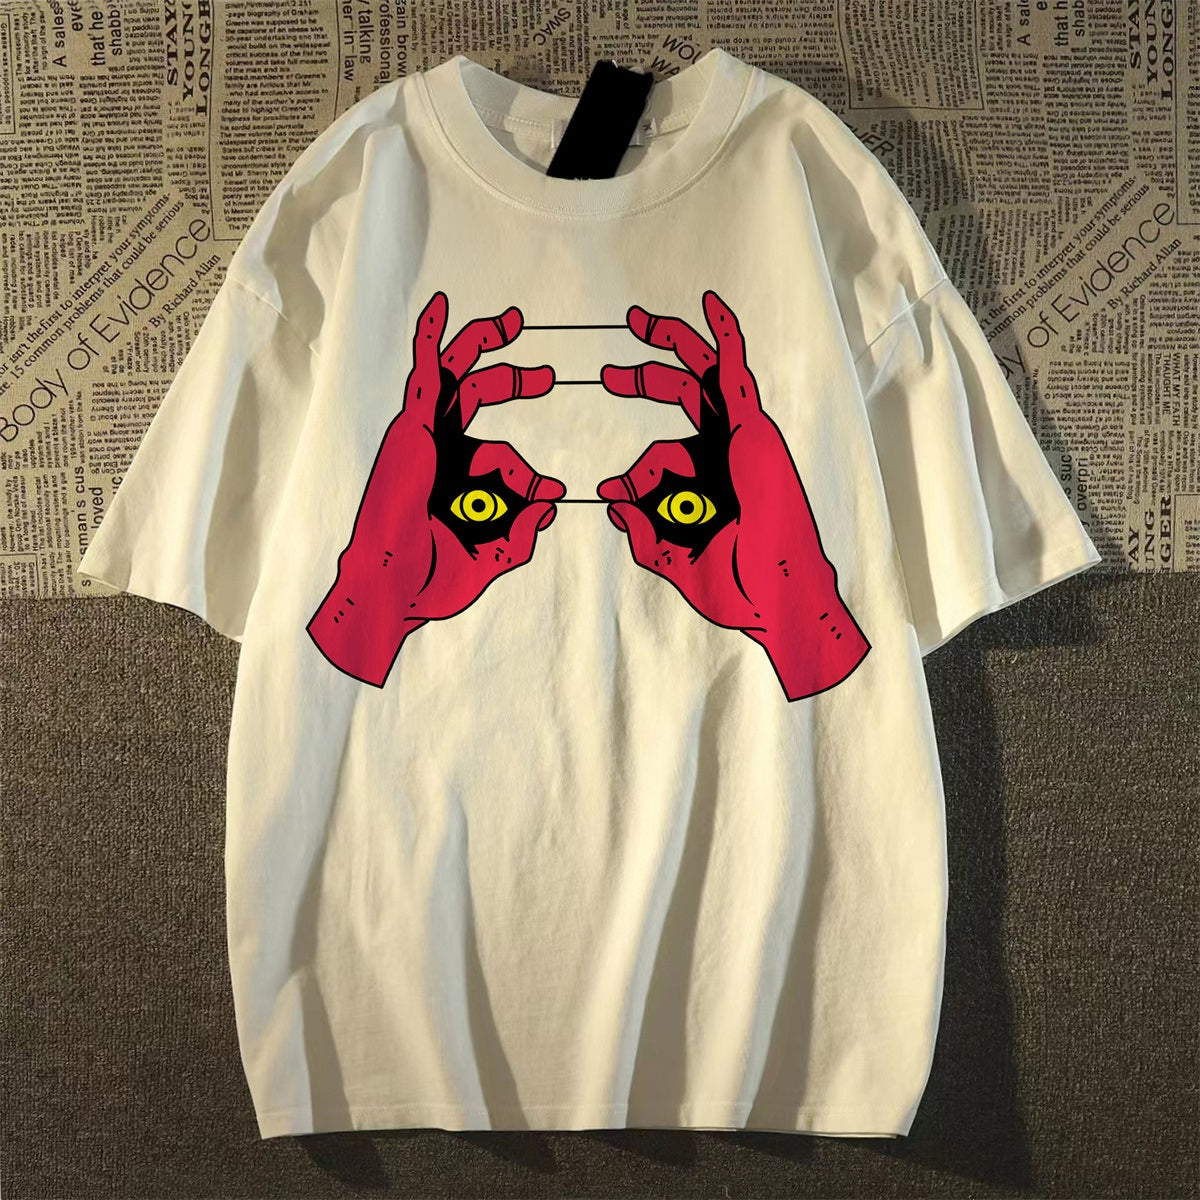 Unisex Retro funny printed cotton short-sleeved T-shirt